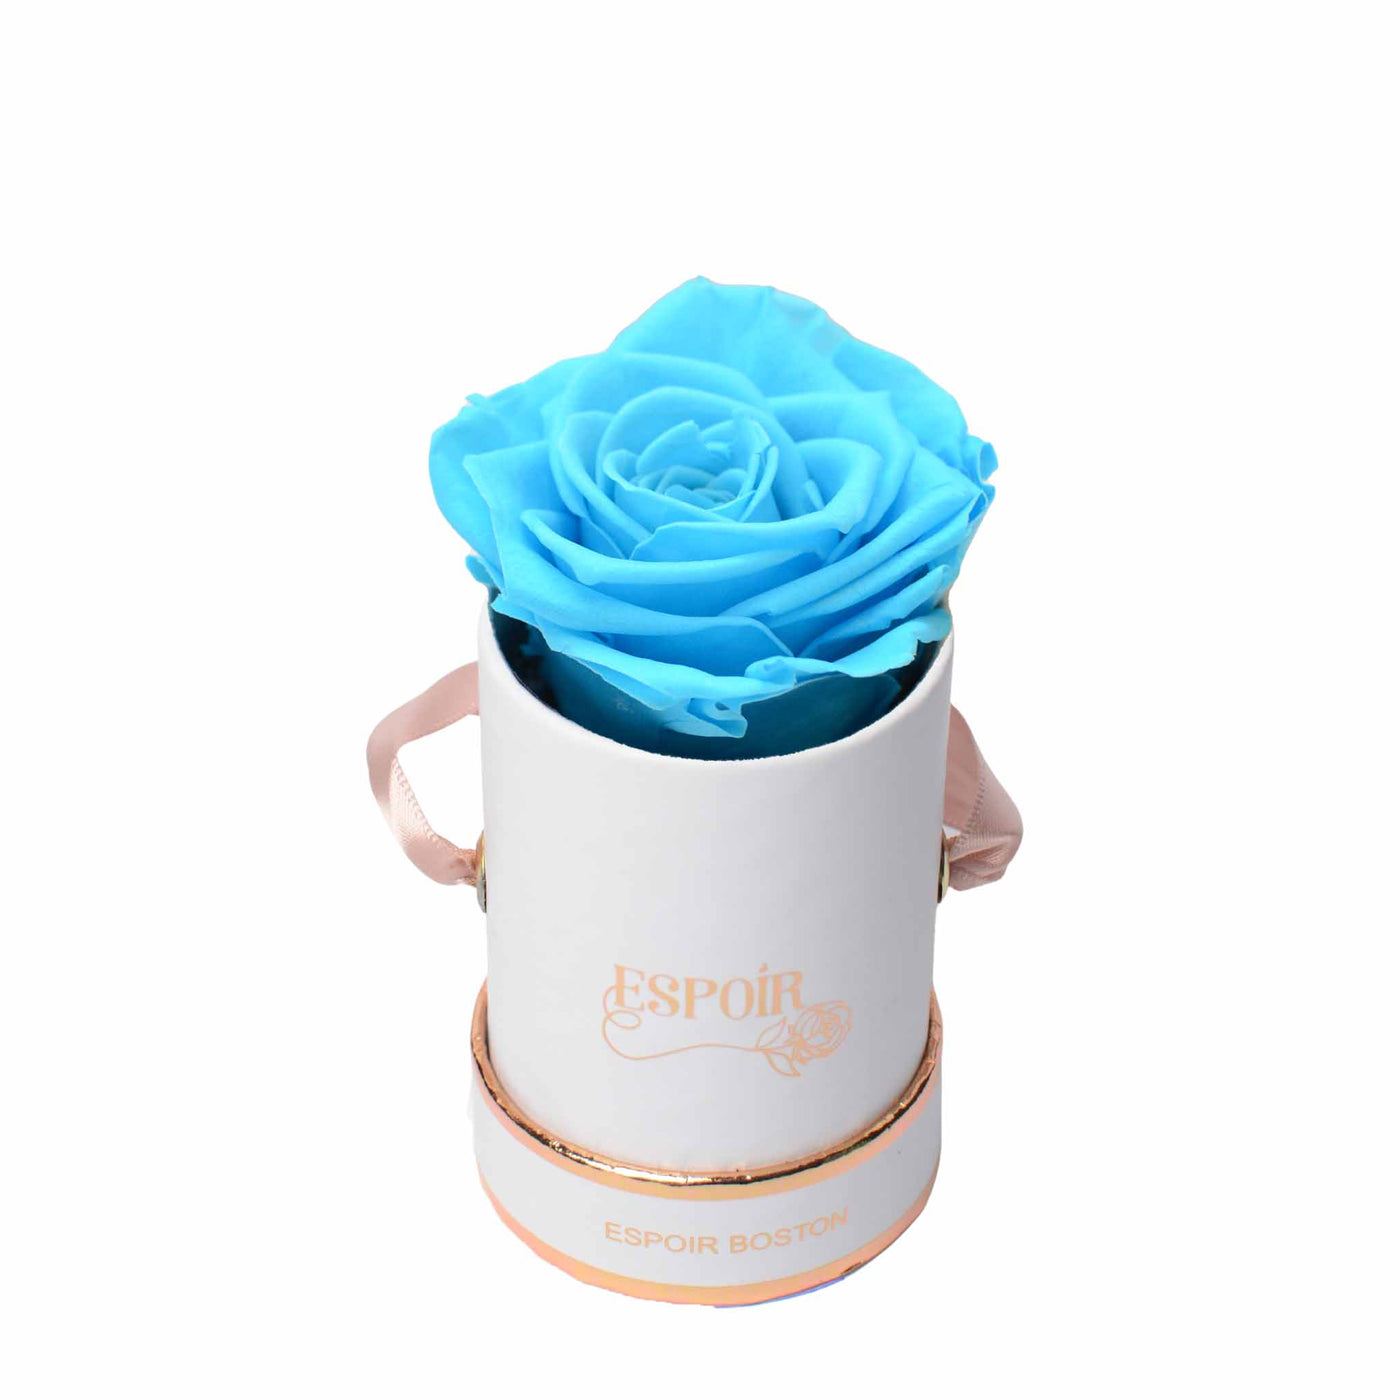 The Tea Cup Rose